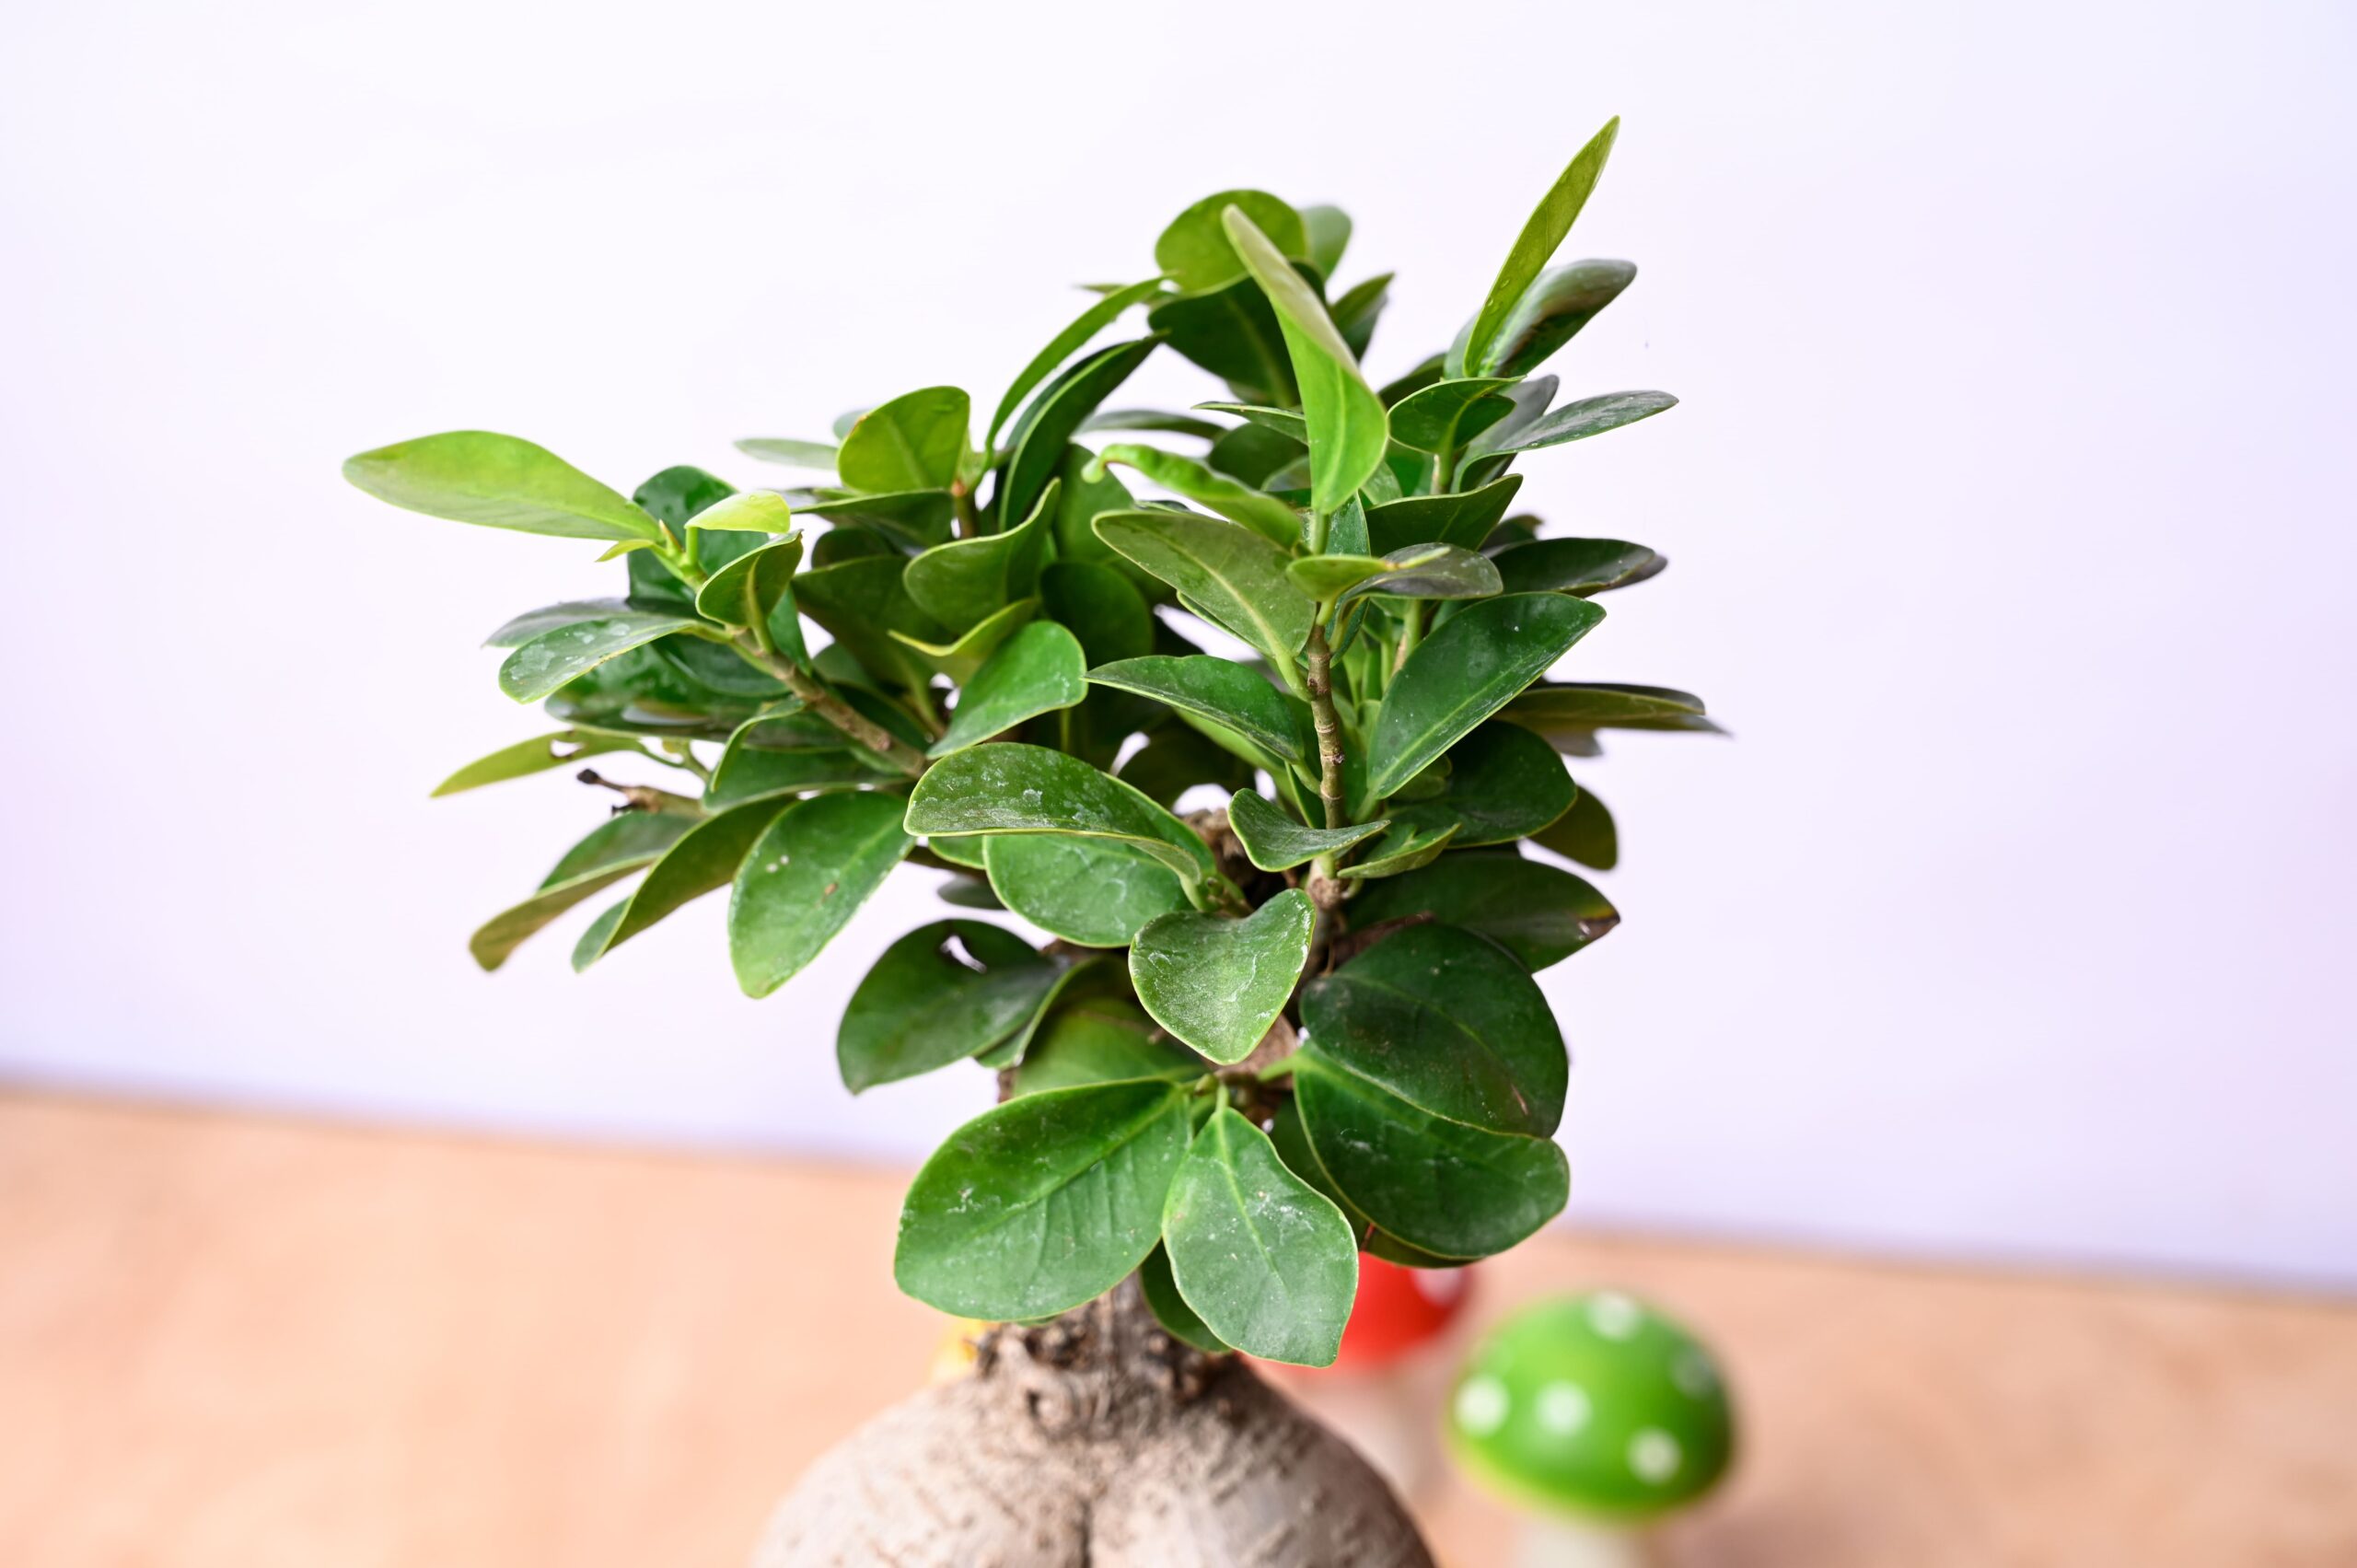 Ficus Ginseng Bonsai(Retusa Microcarpa) Live Plant 4 Years Old